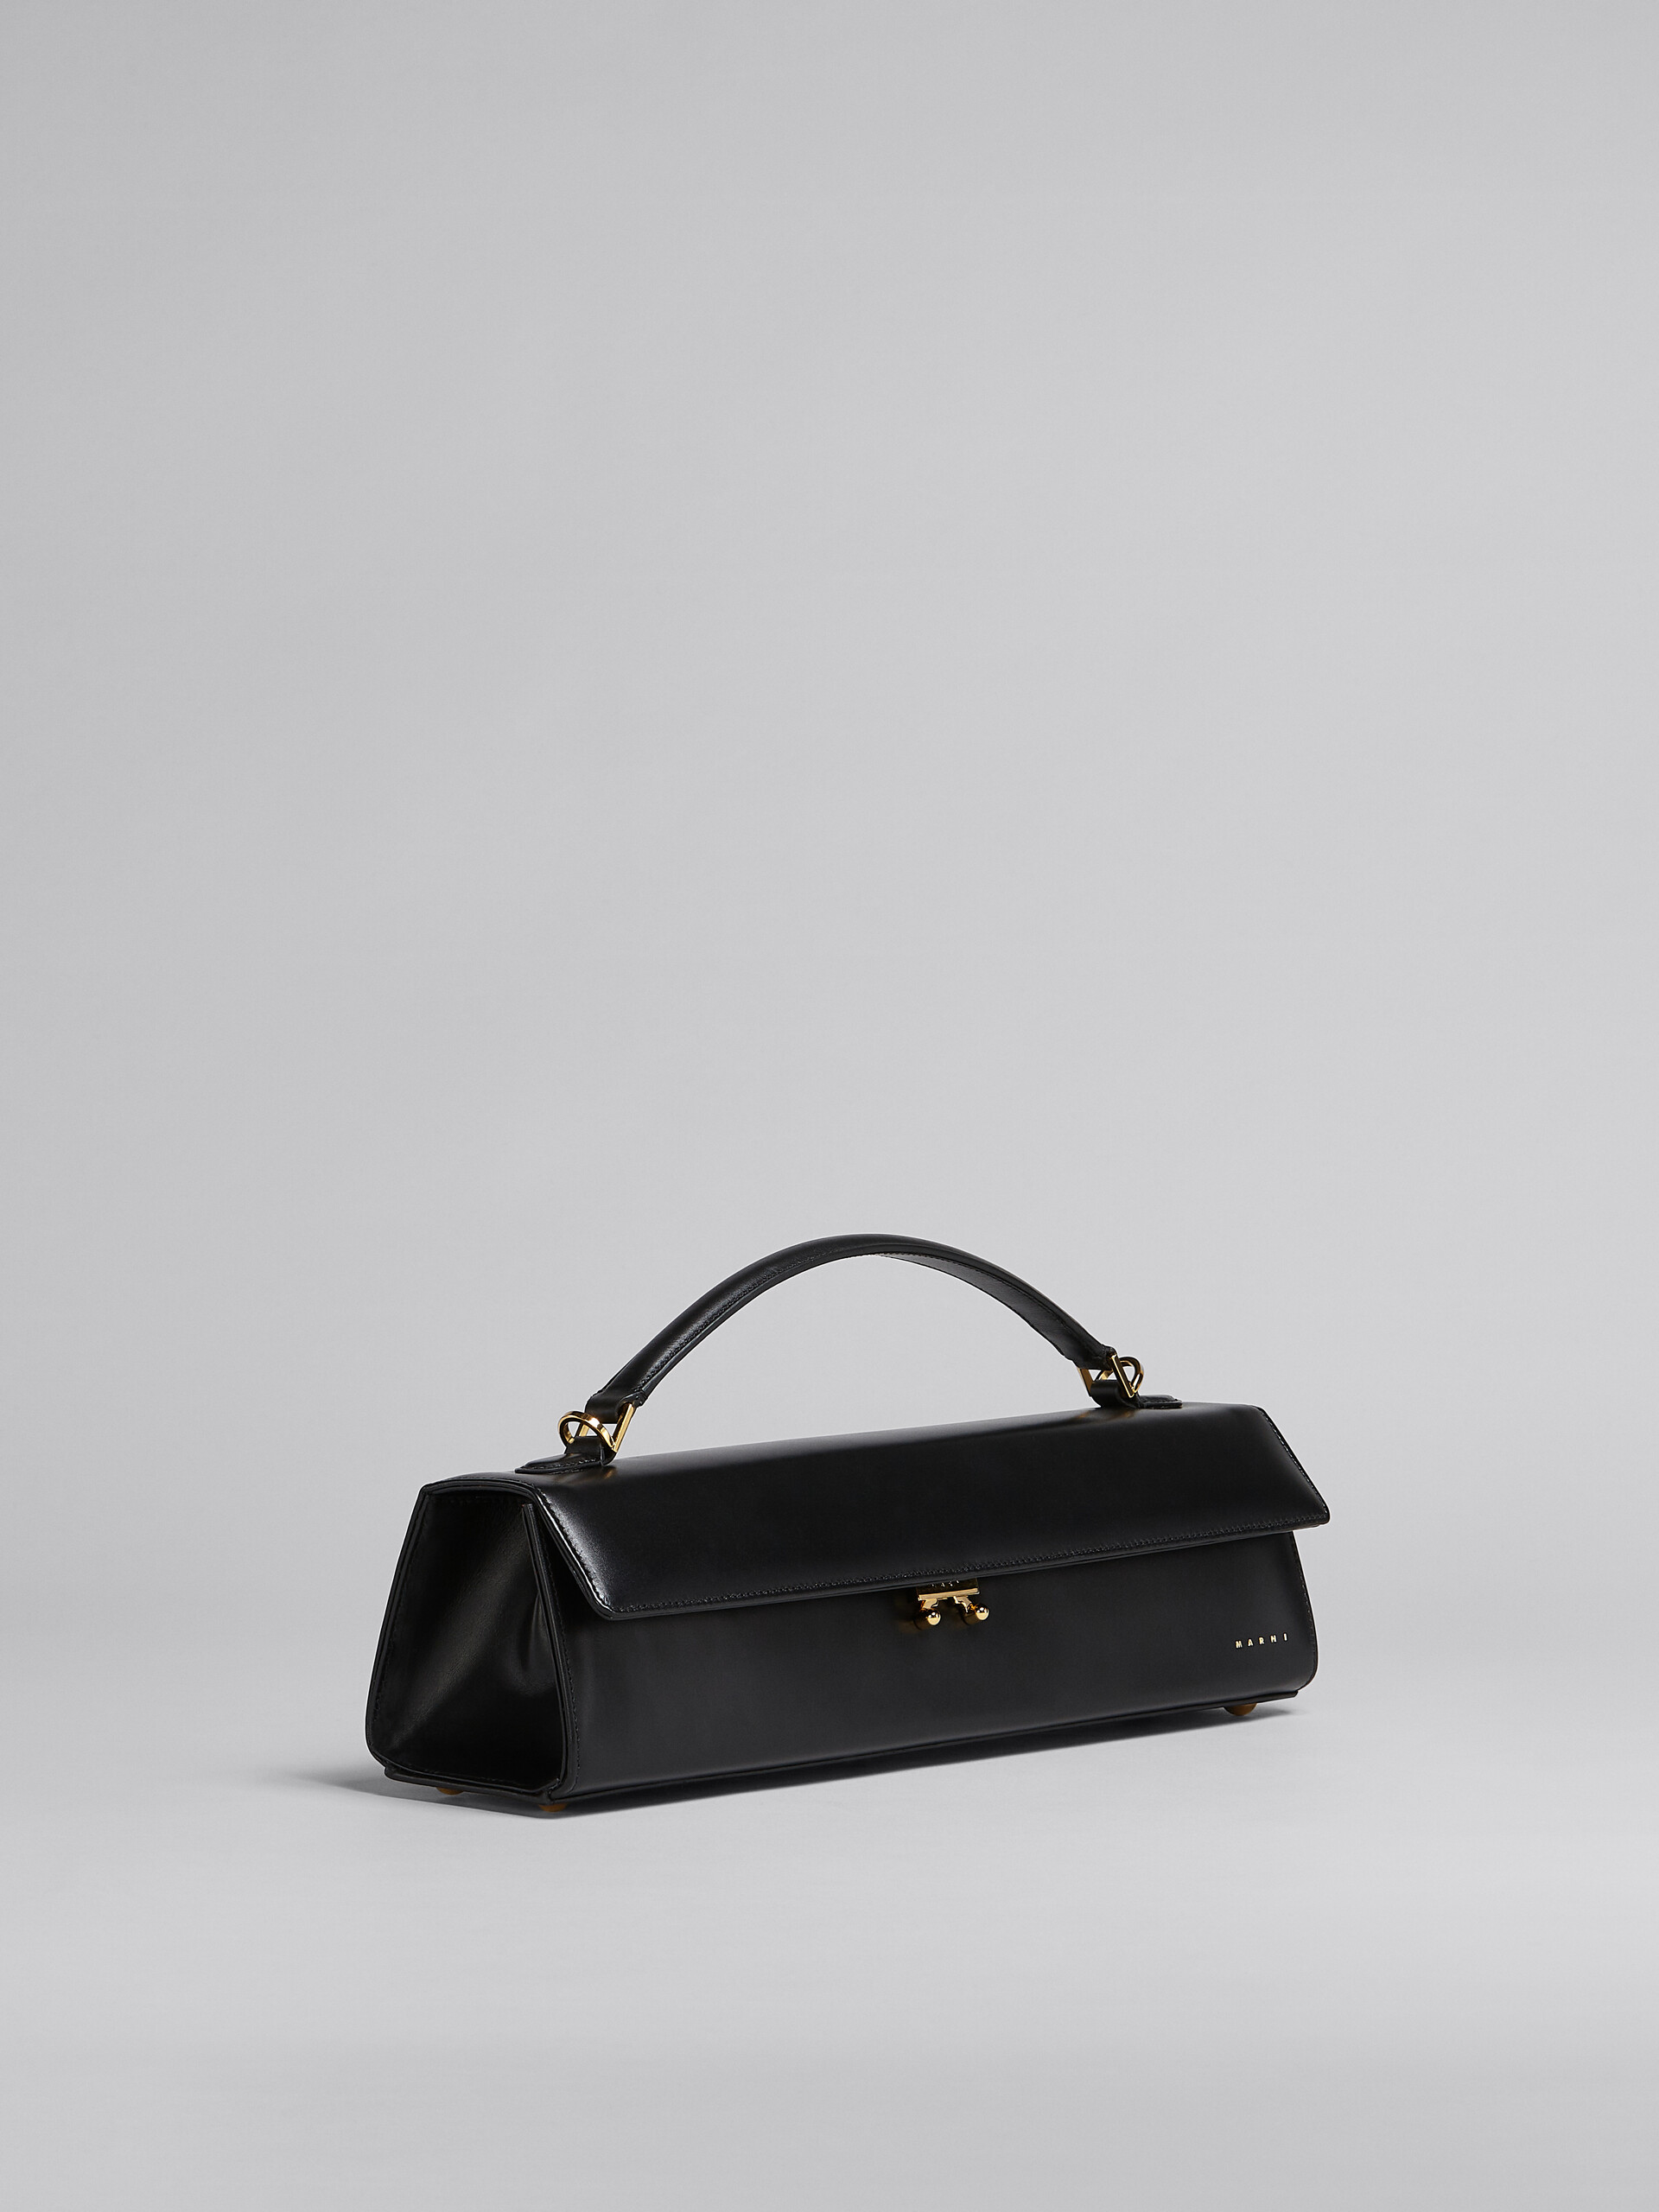 Relativity Large Bag in black leather - Handbags - Image 6